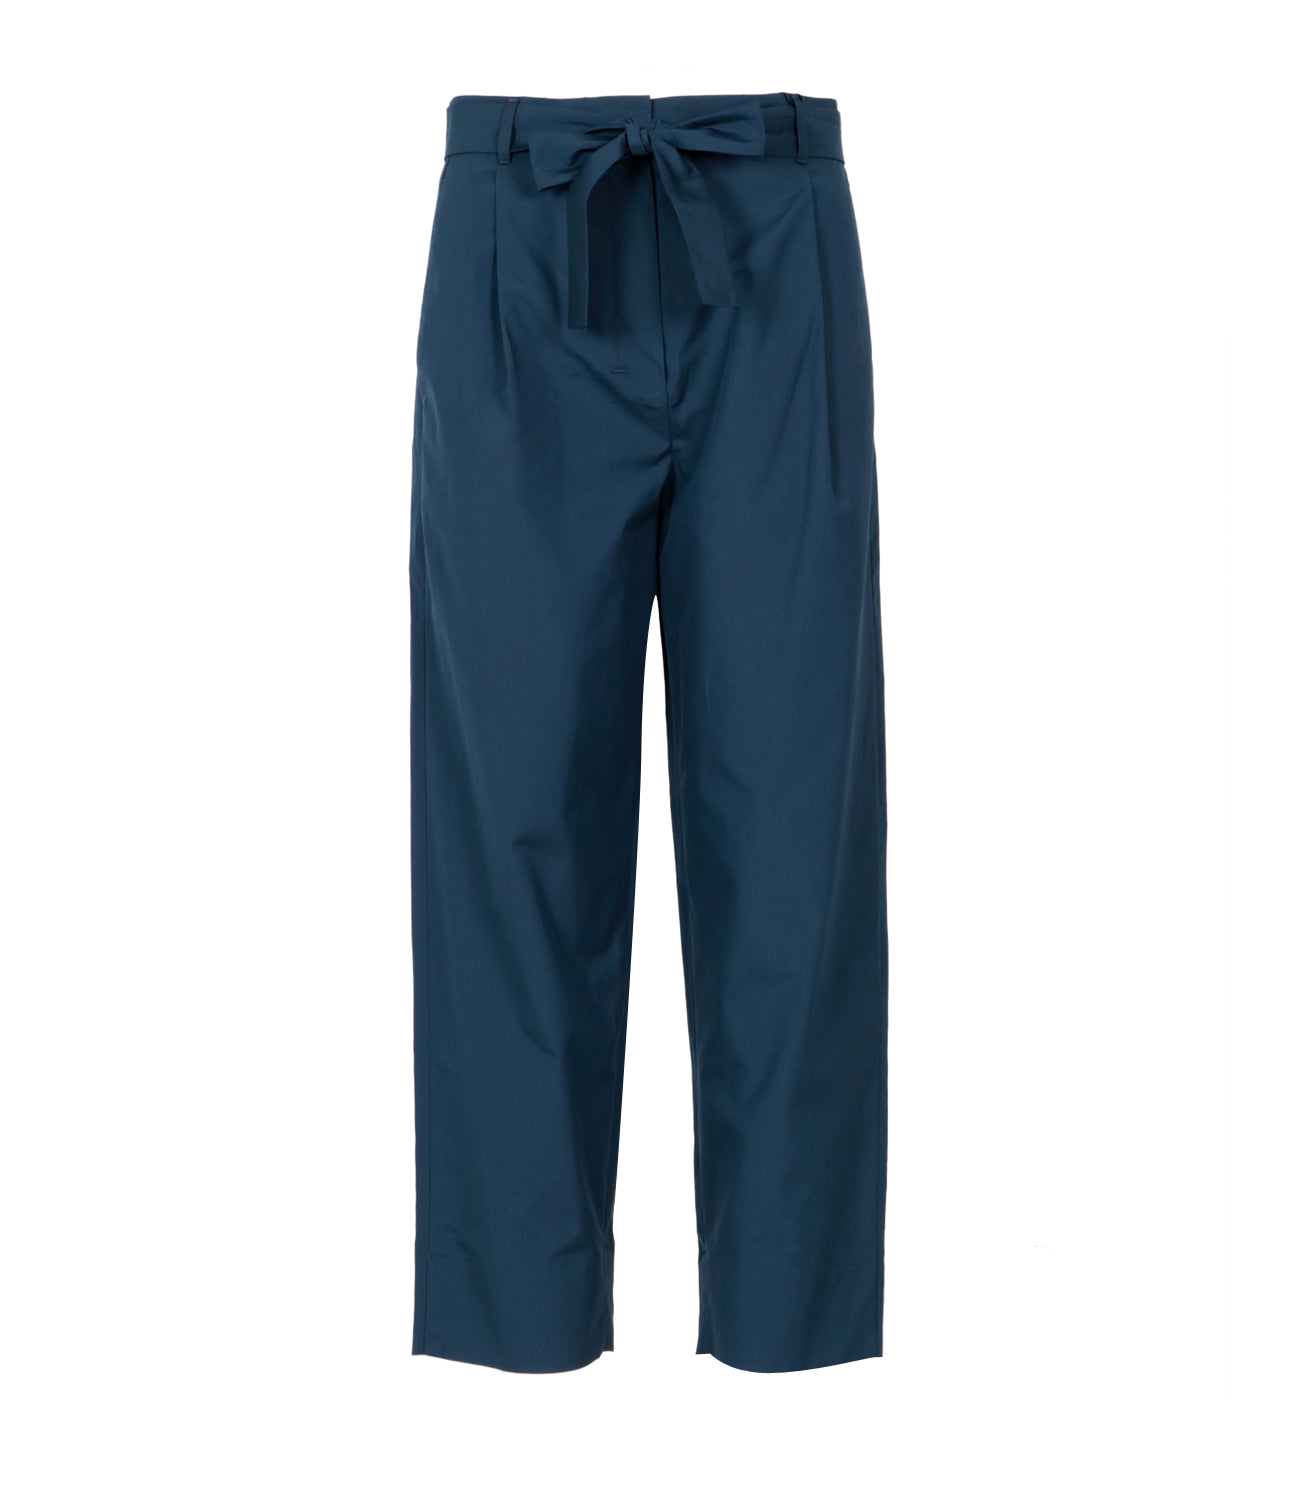 S Max Mara | Attilio Navy Blue Trousers